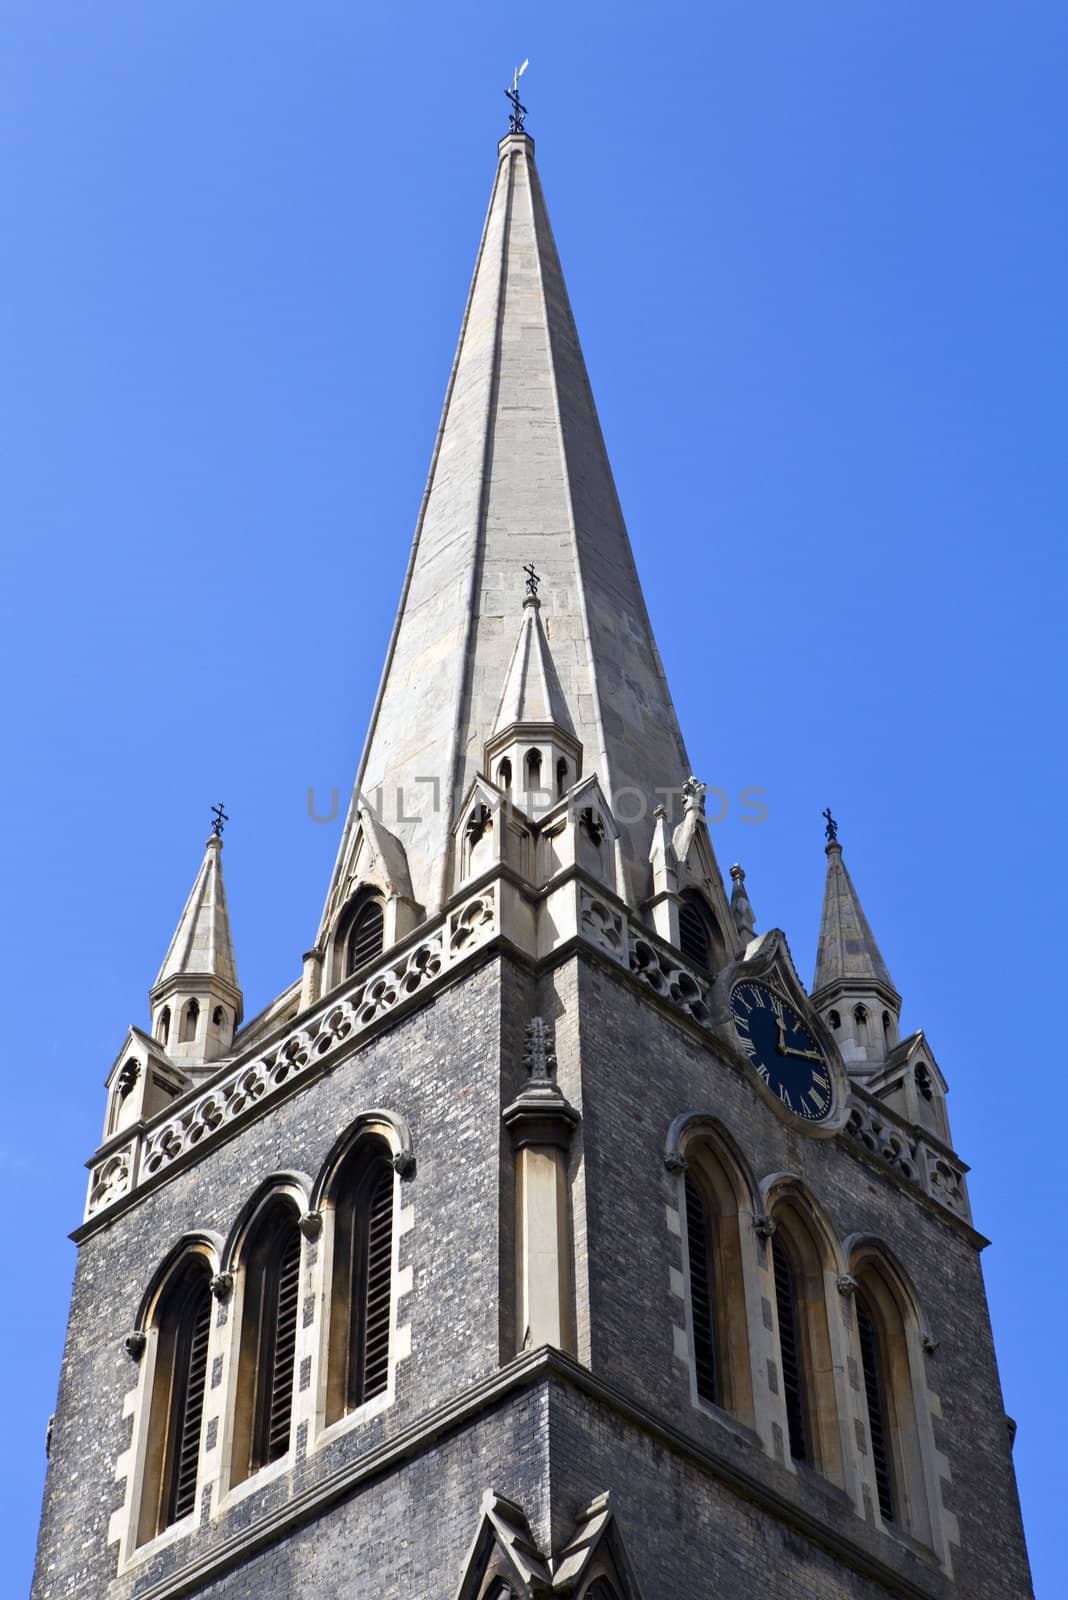 St. James The Less Church in Paddington, London.